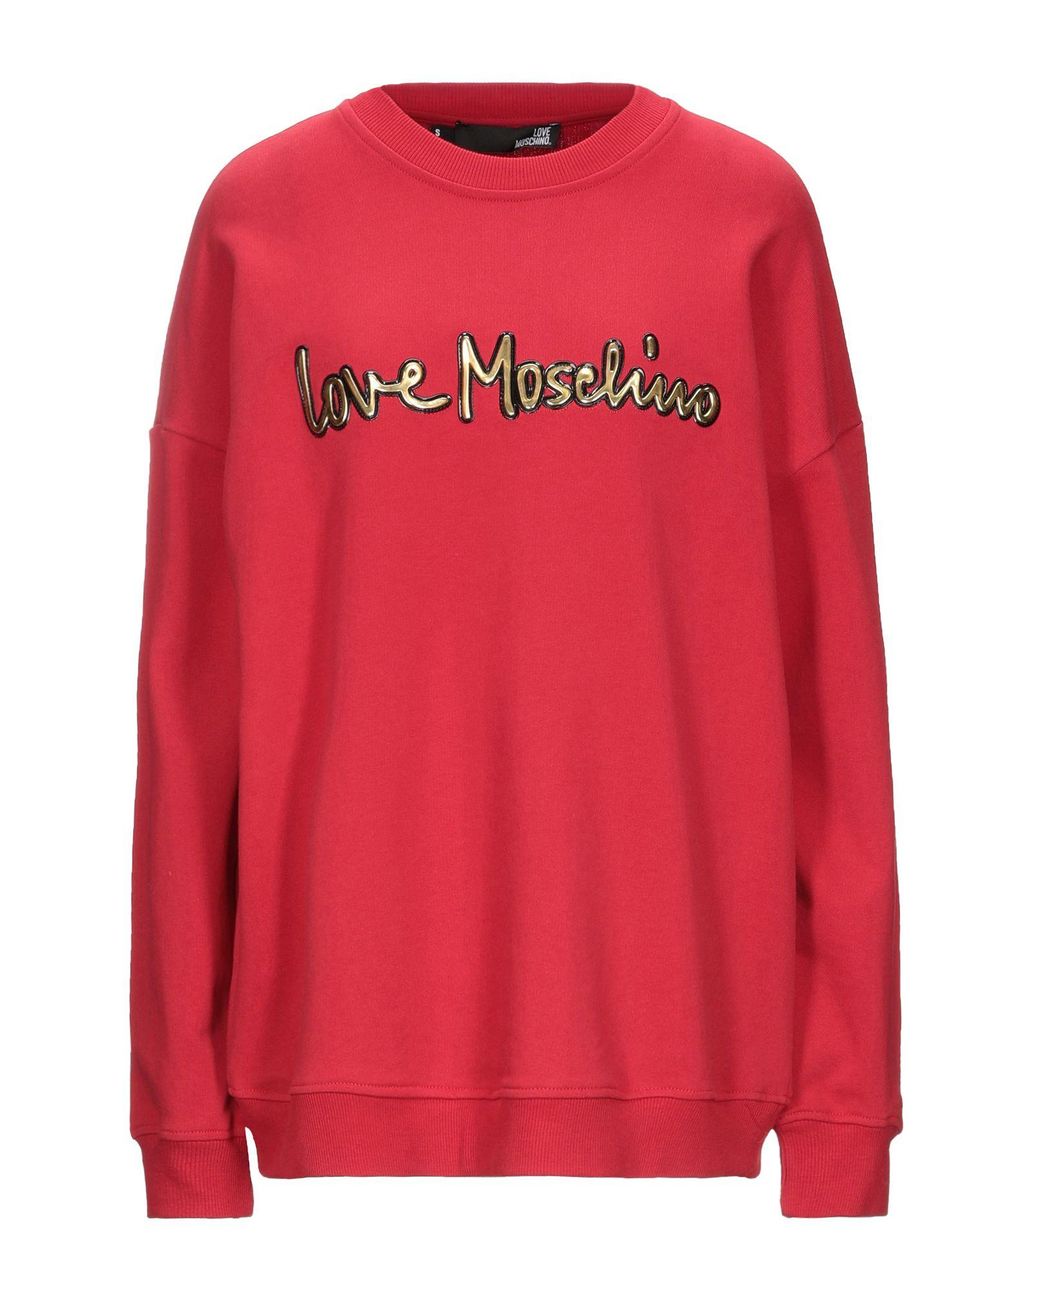 Love Moschino Sweatshirt in Red - Lyst